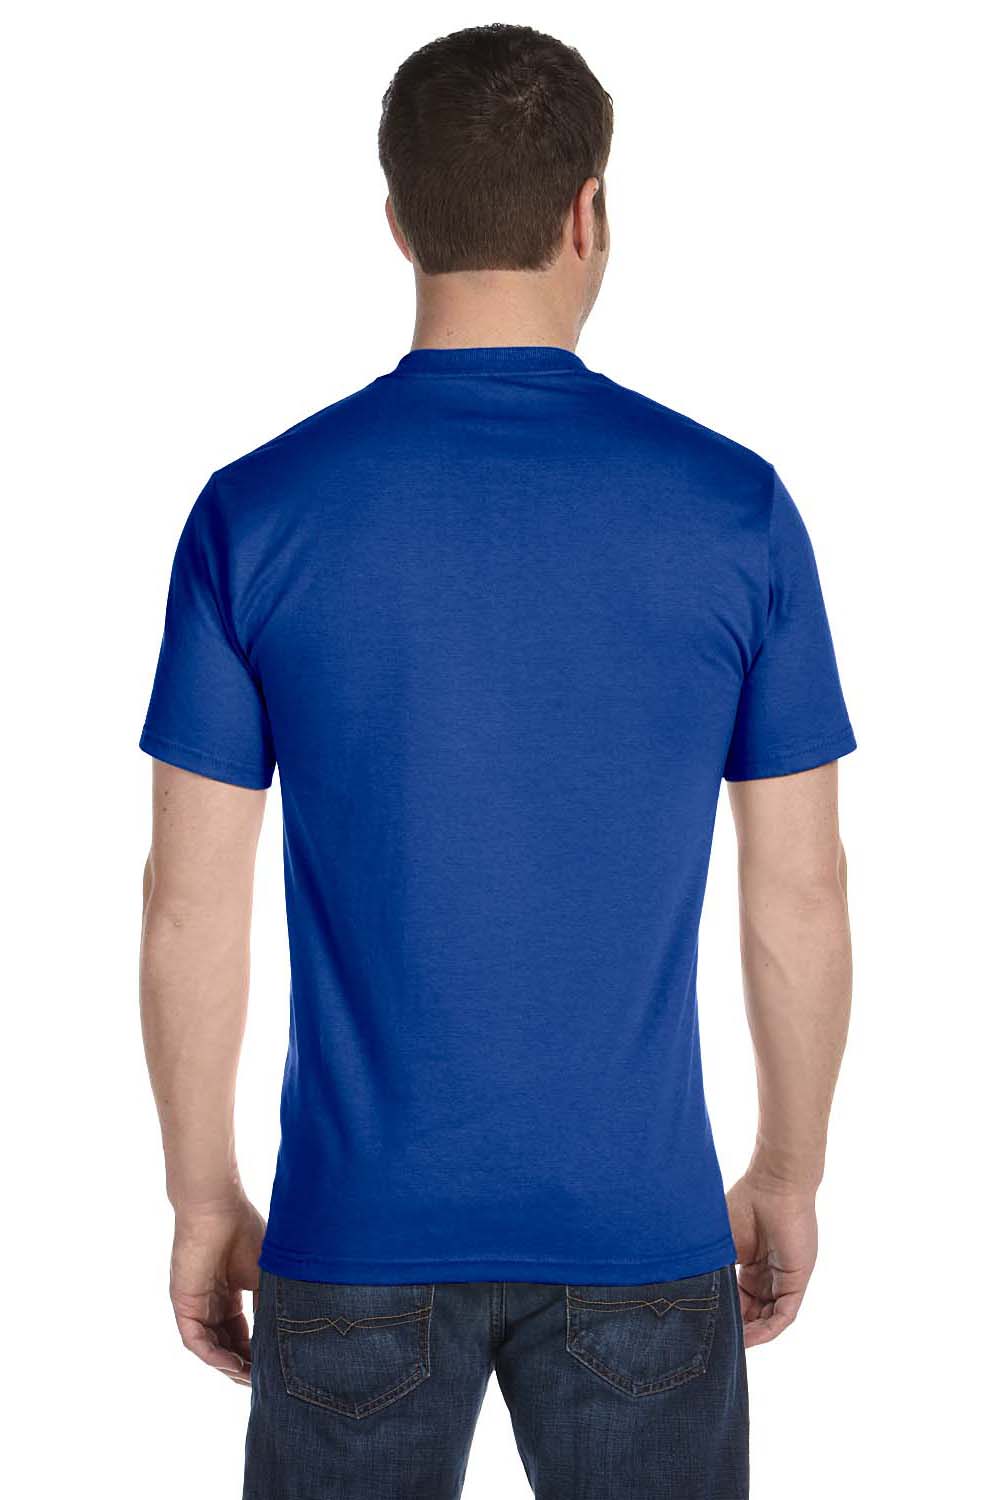 Hanes 5280 Mens ComfortSoft Short Sleeve Crewneck T-Shirt Royal Blue Back